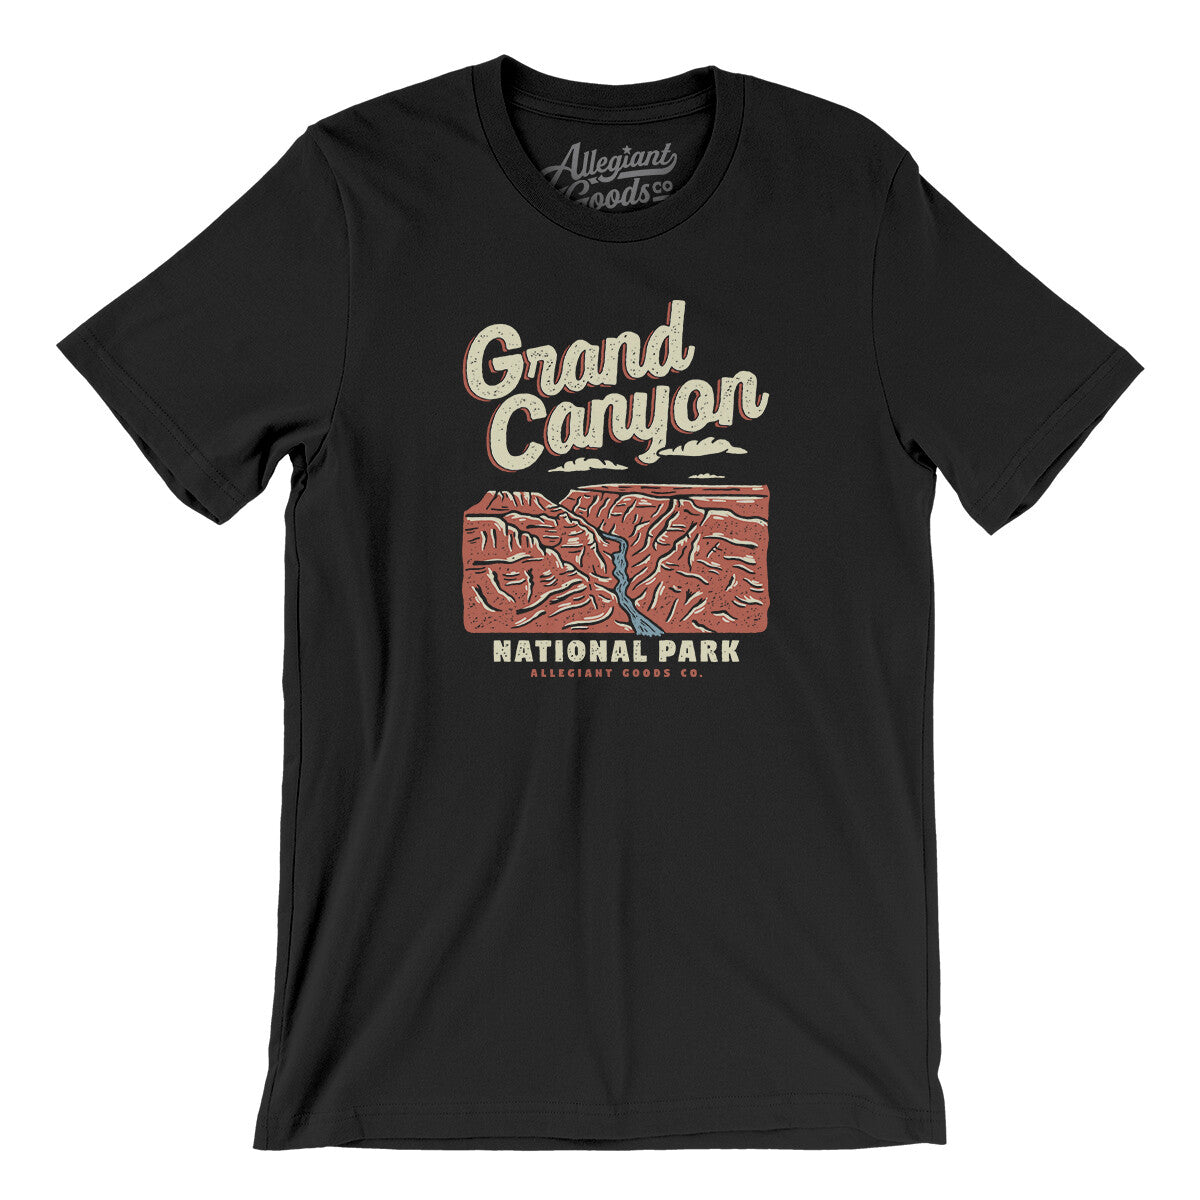 Grand Canyon National Park Men/Unisex T-Shirt - Allegiant Goods Co.